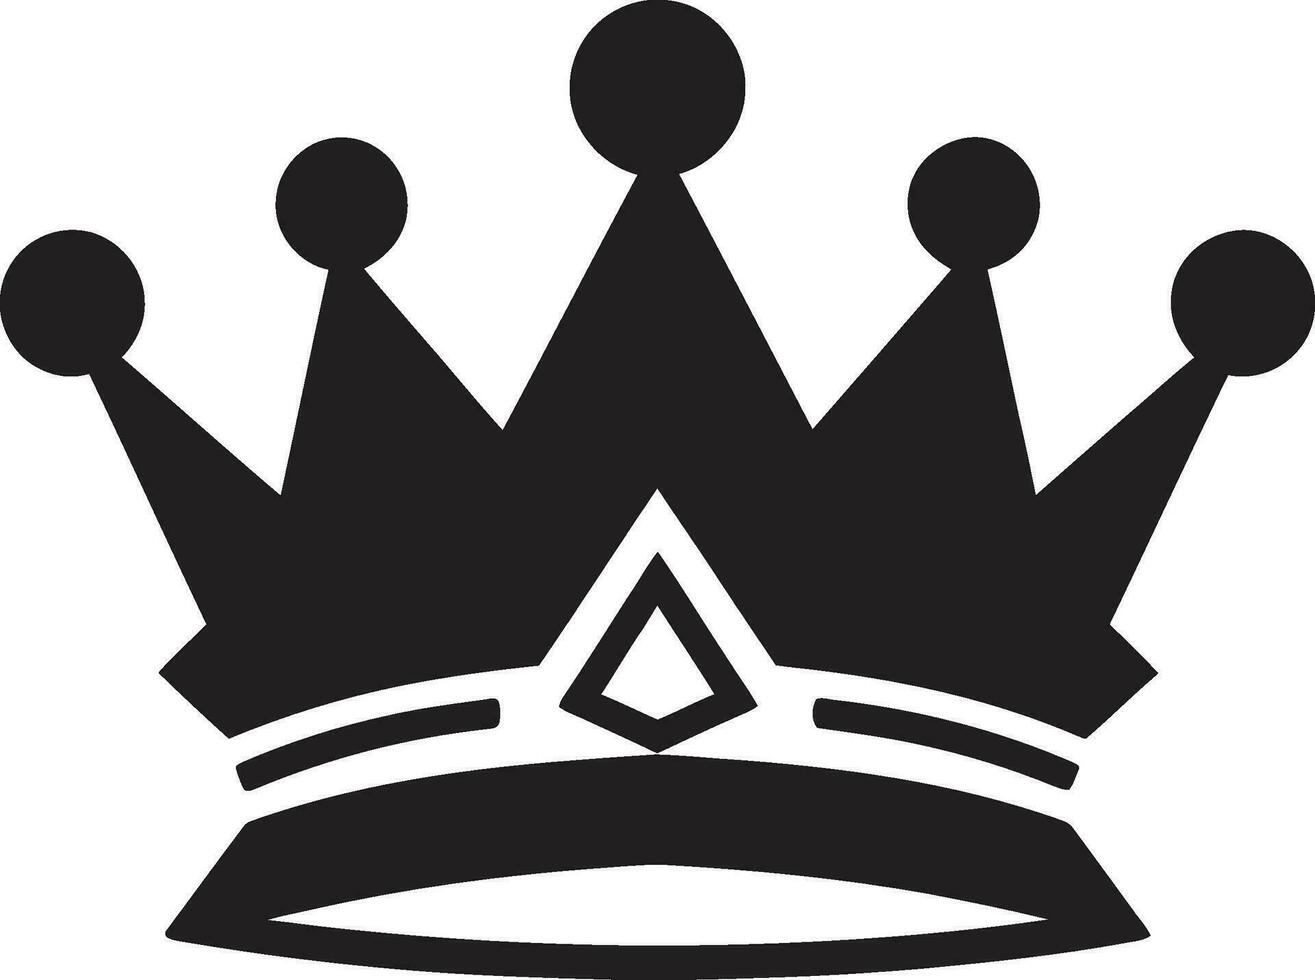 Royal Mastery Crown Logo in Monochrome Monarchs Insignia Black Crown Vector Icon